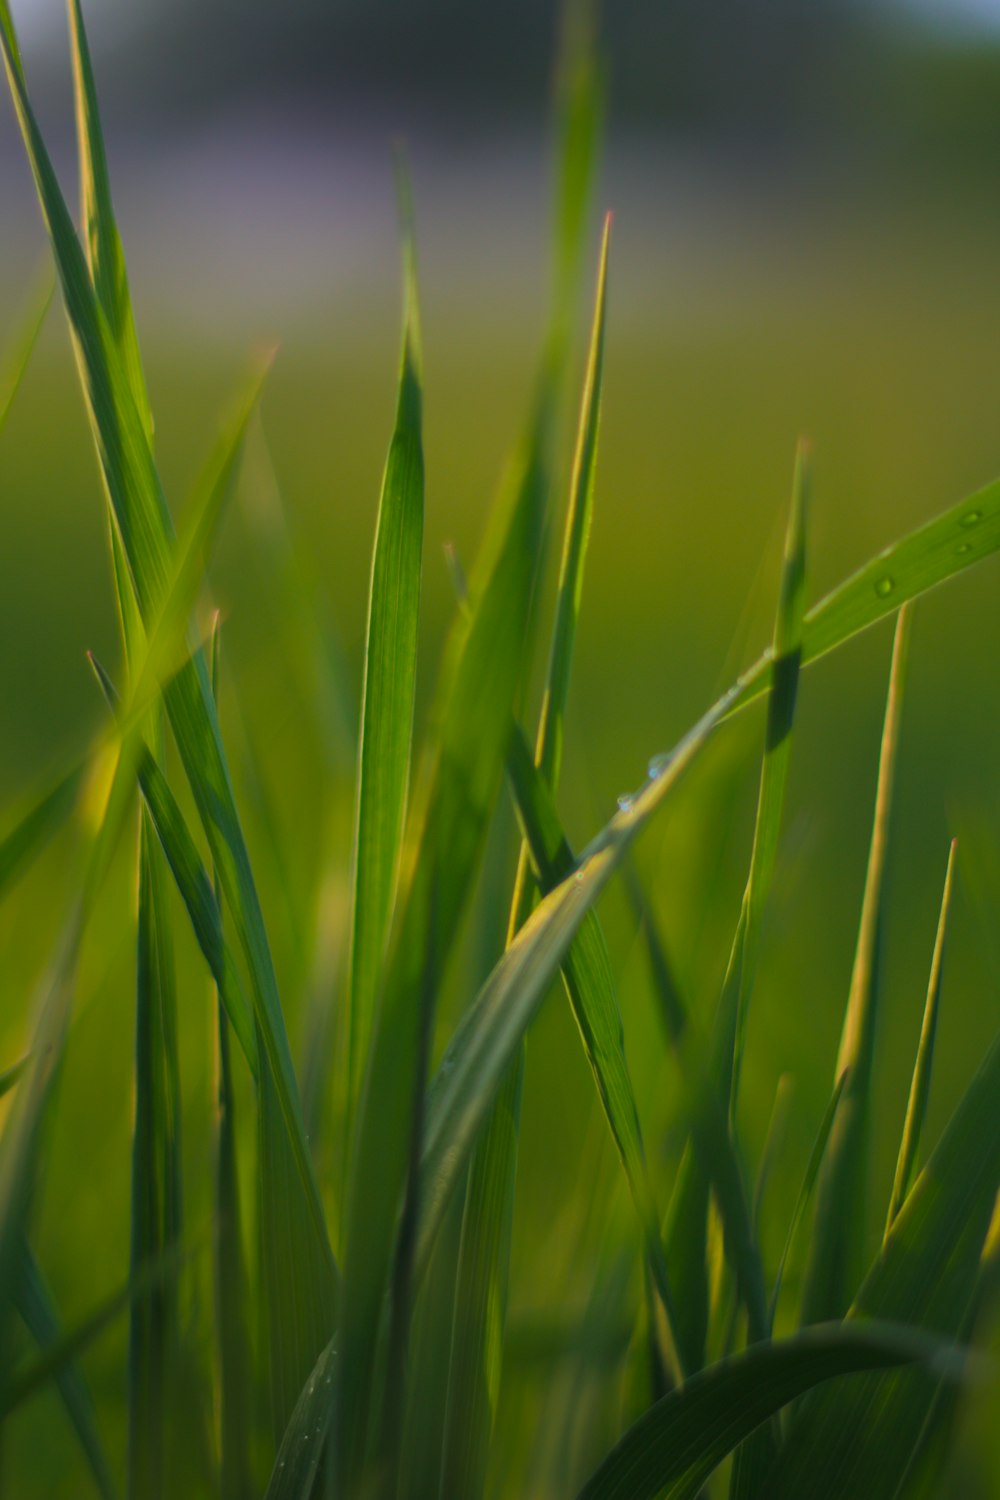 green grass field during daytime photo – Free Green Image on Unsplash